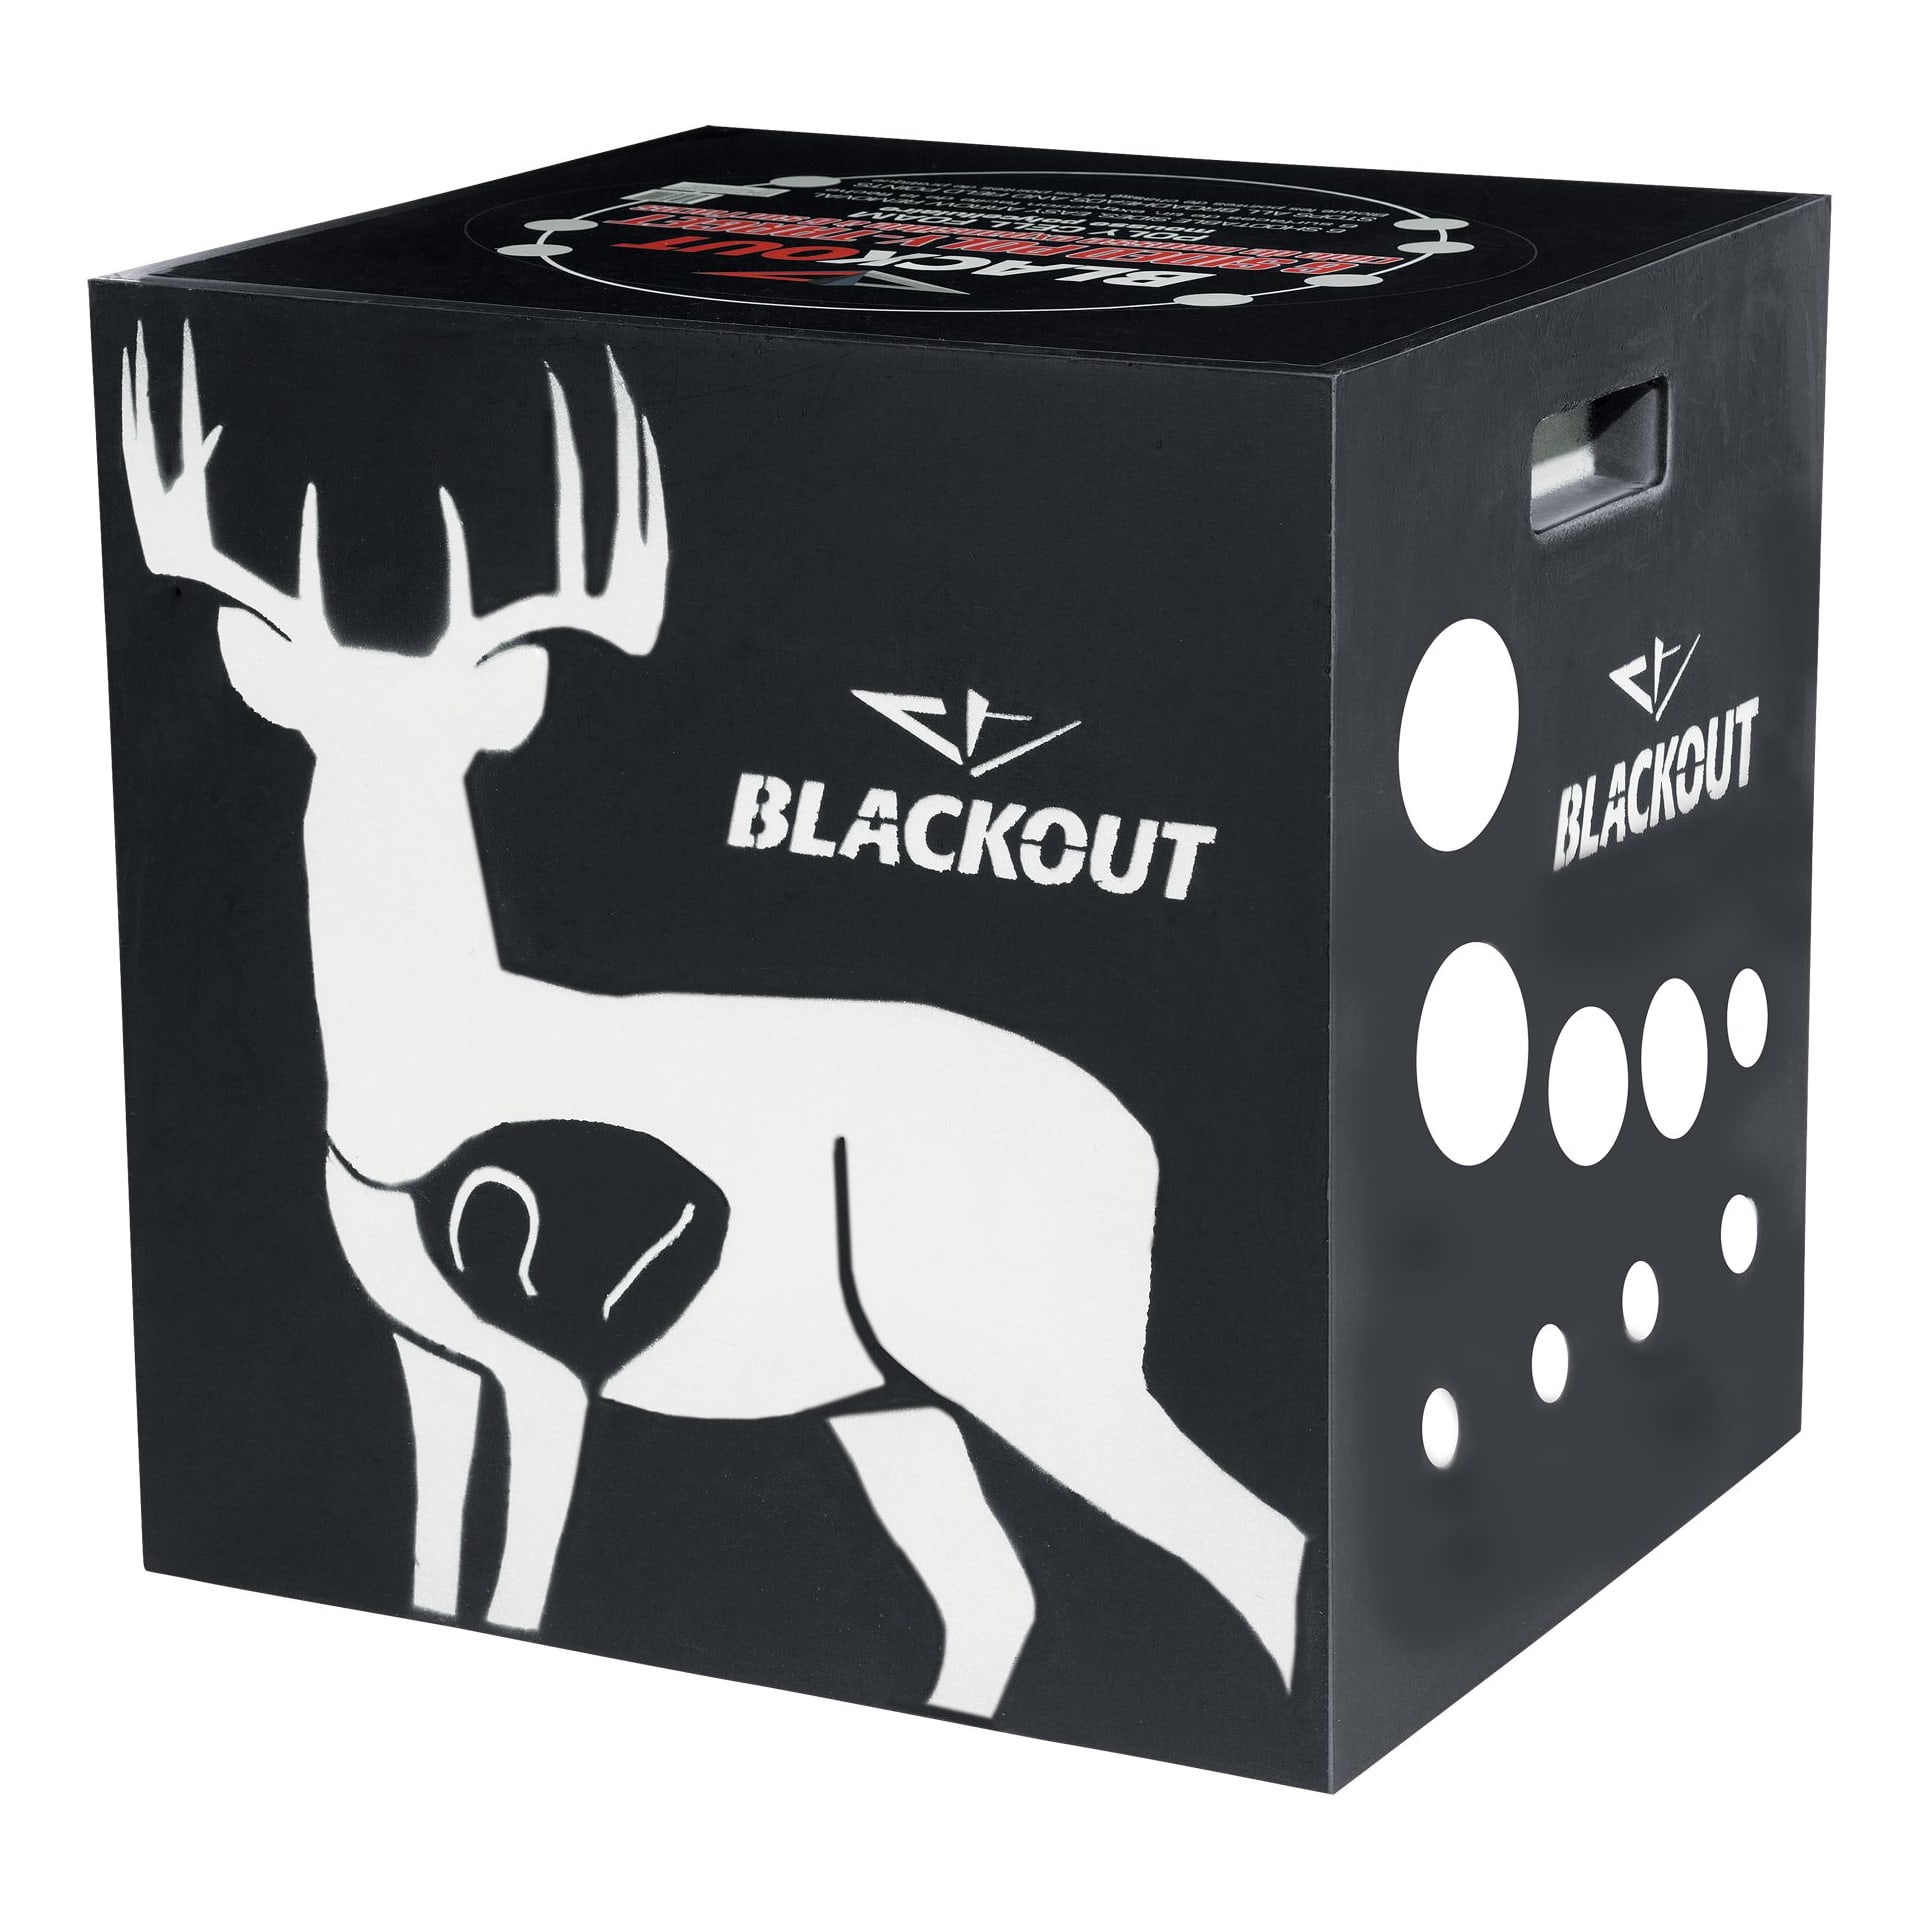 BlackOut 6-Sided Foam Archery Target - Factory Second`